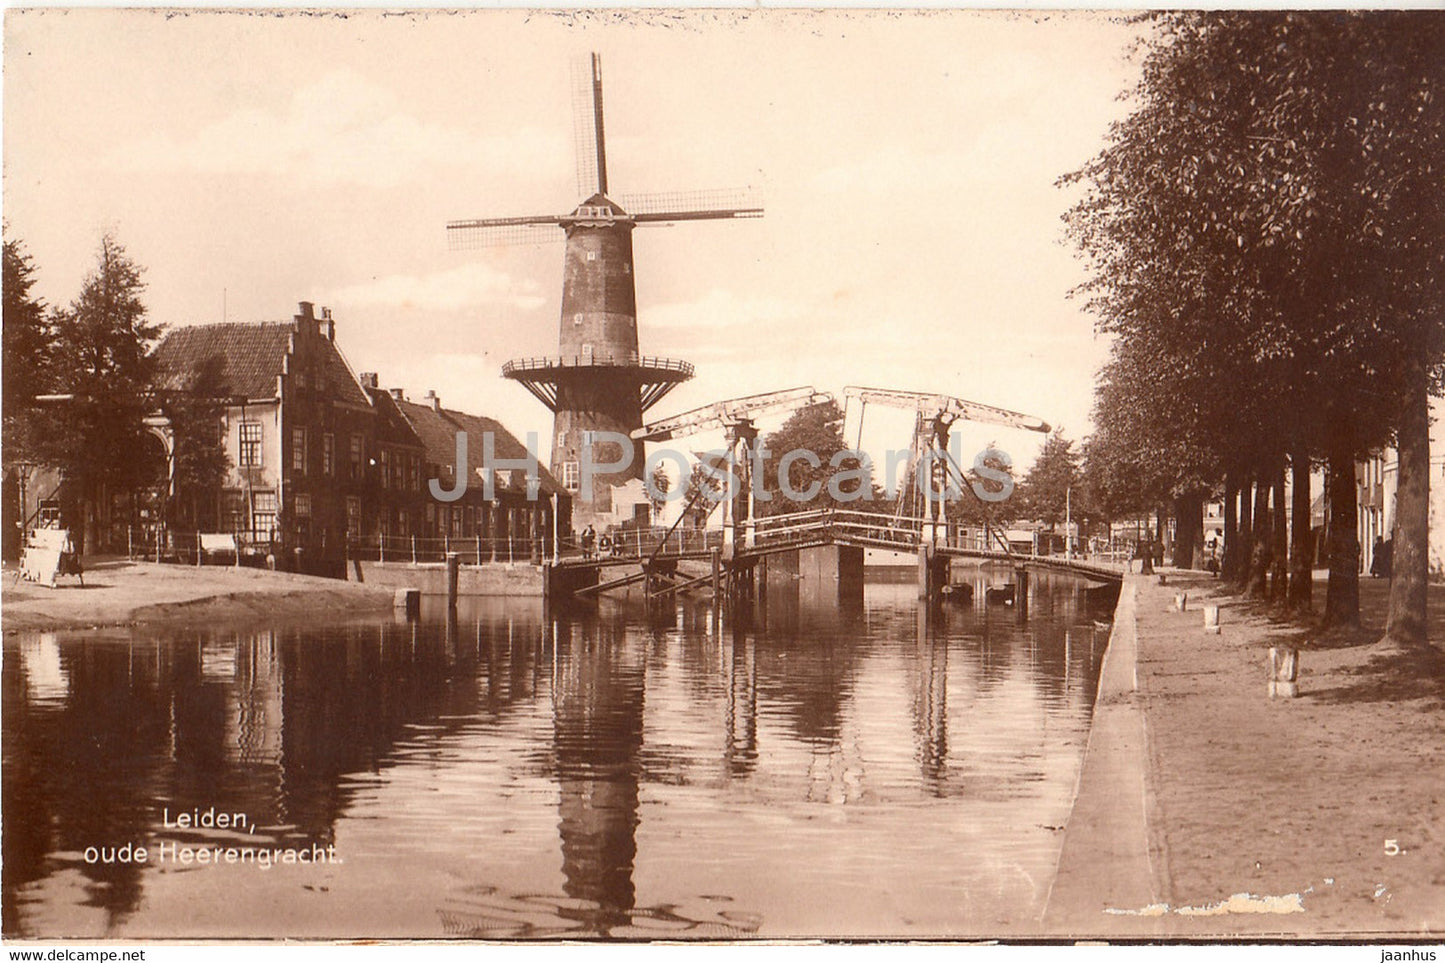 Leiden - oude Heerengracht - windmill - old postcard - Netherlands - unused - JH Postcards